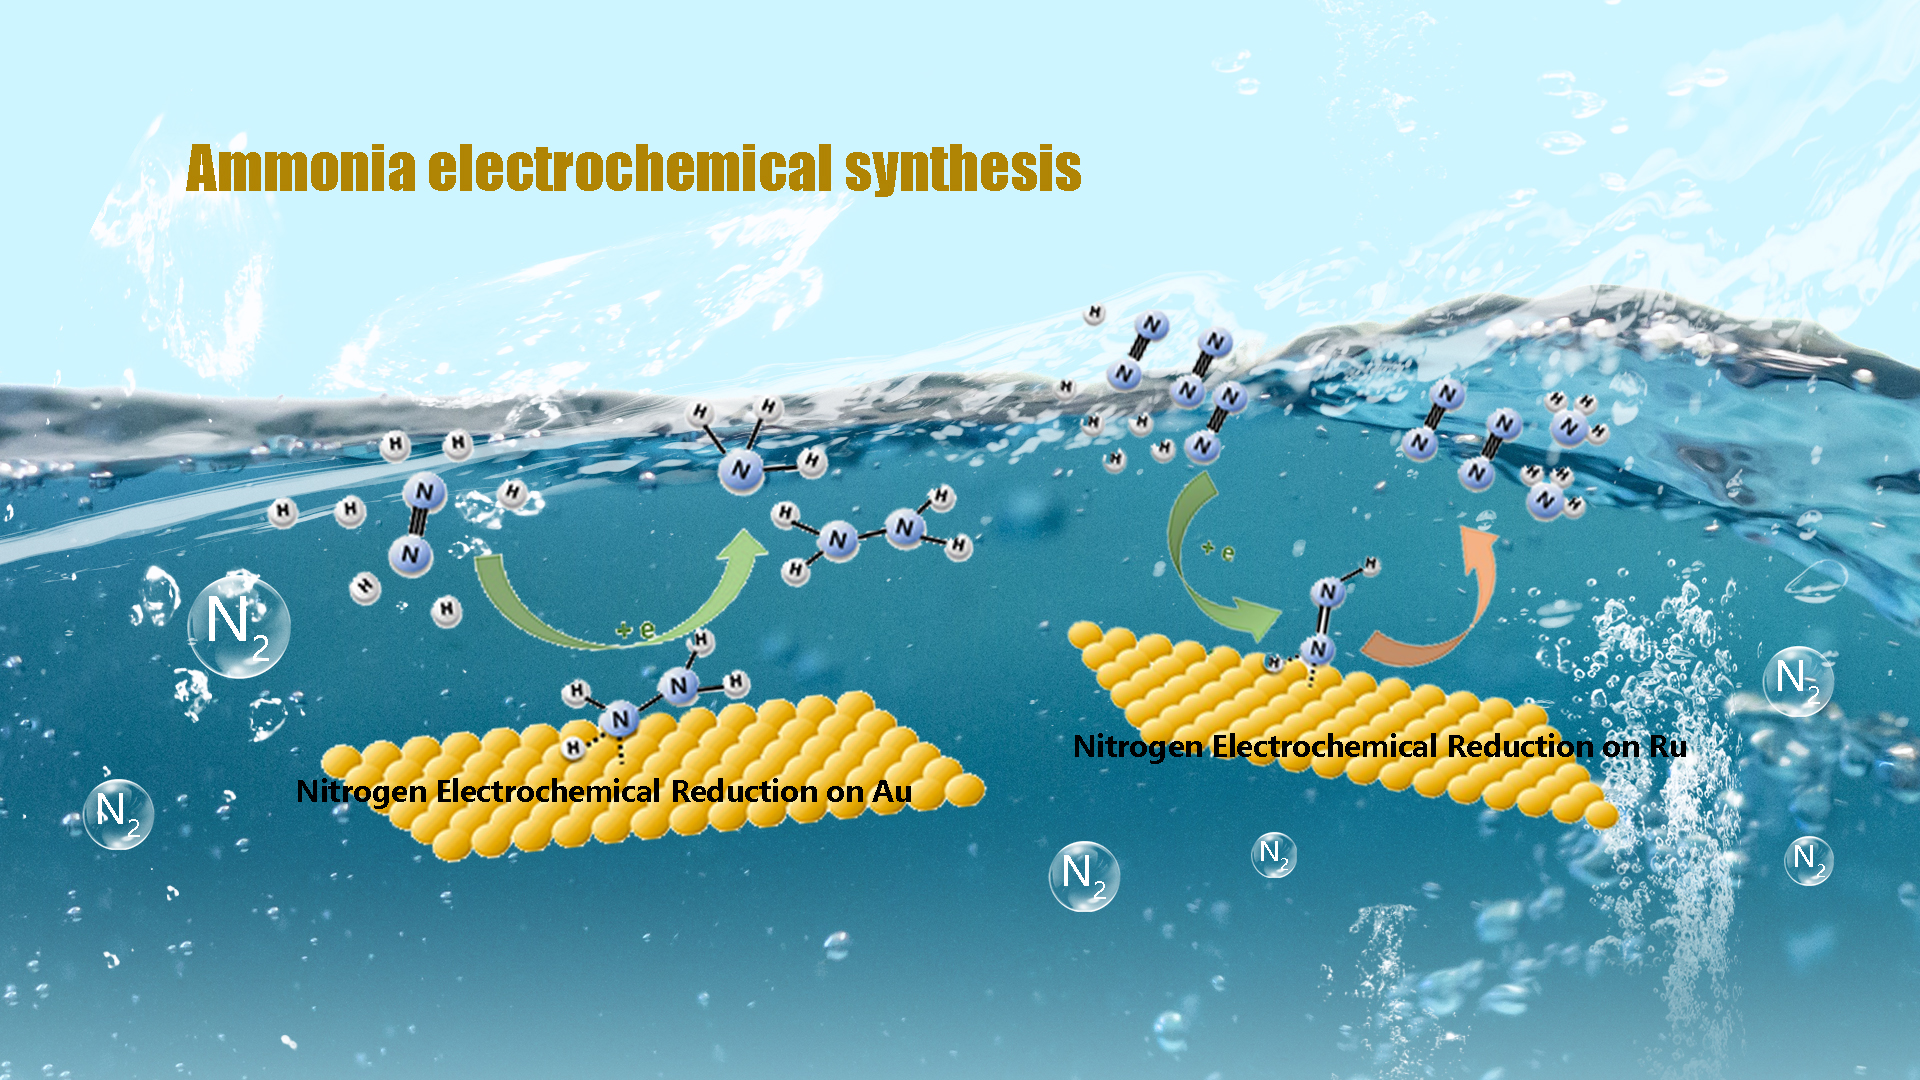 Development of improved electrocatalysts progresses under SUSTech research